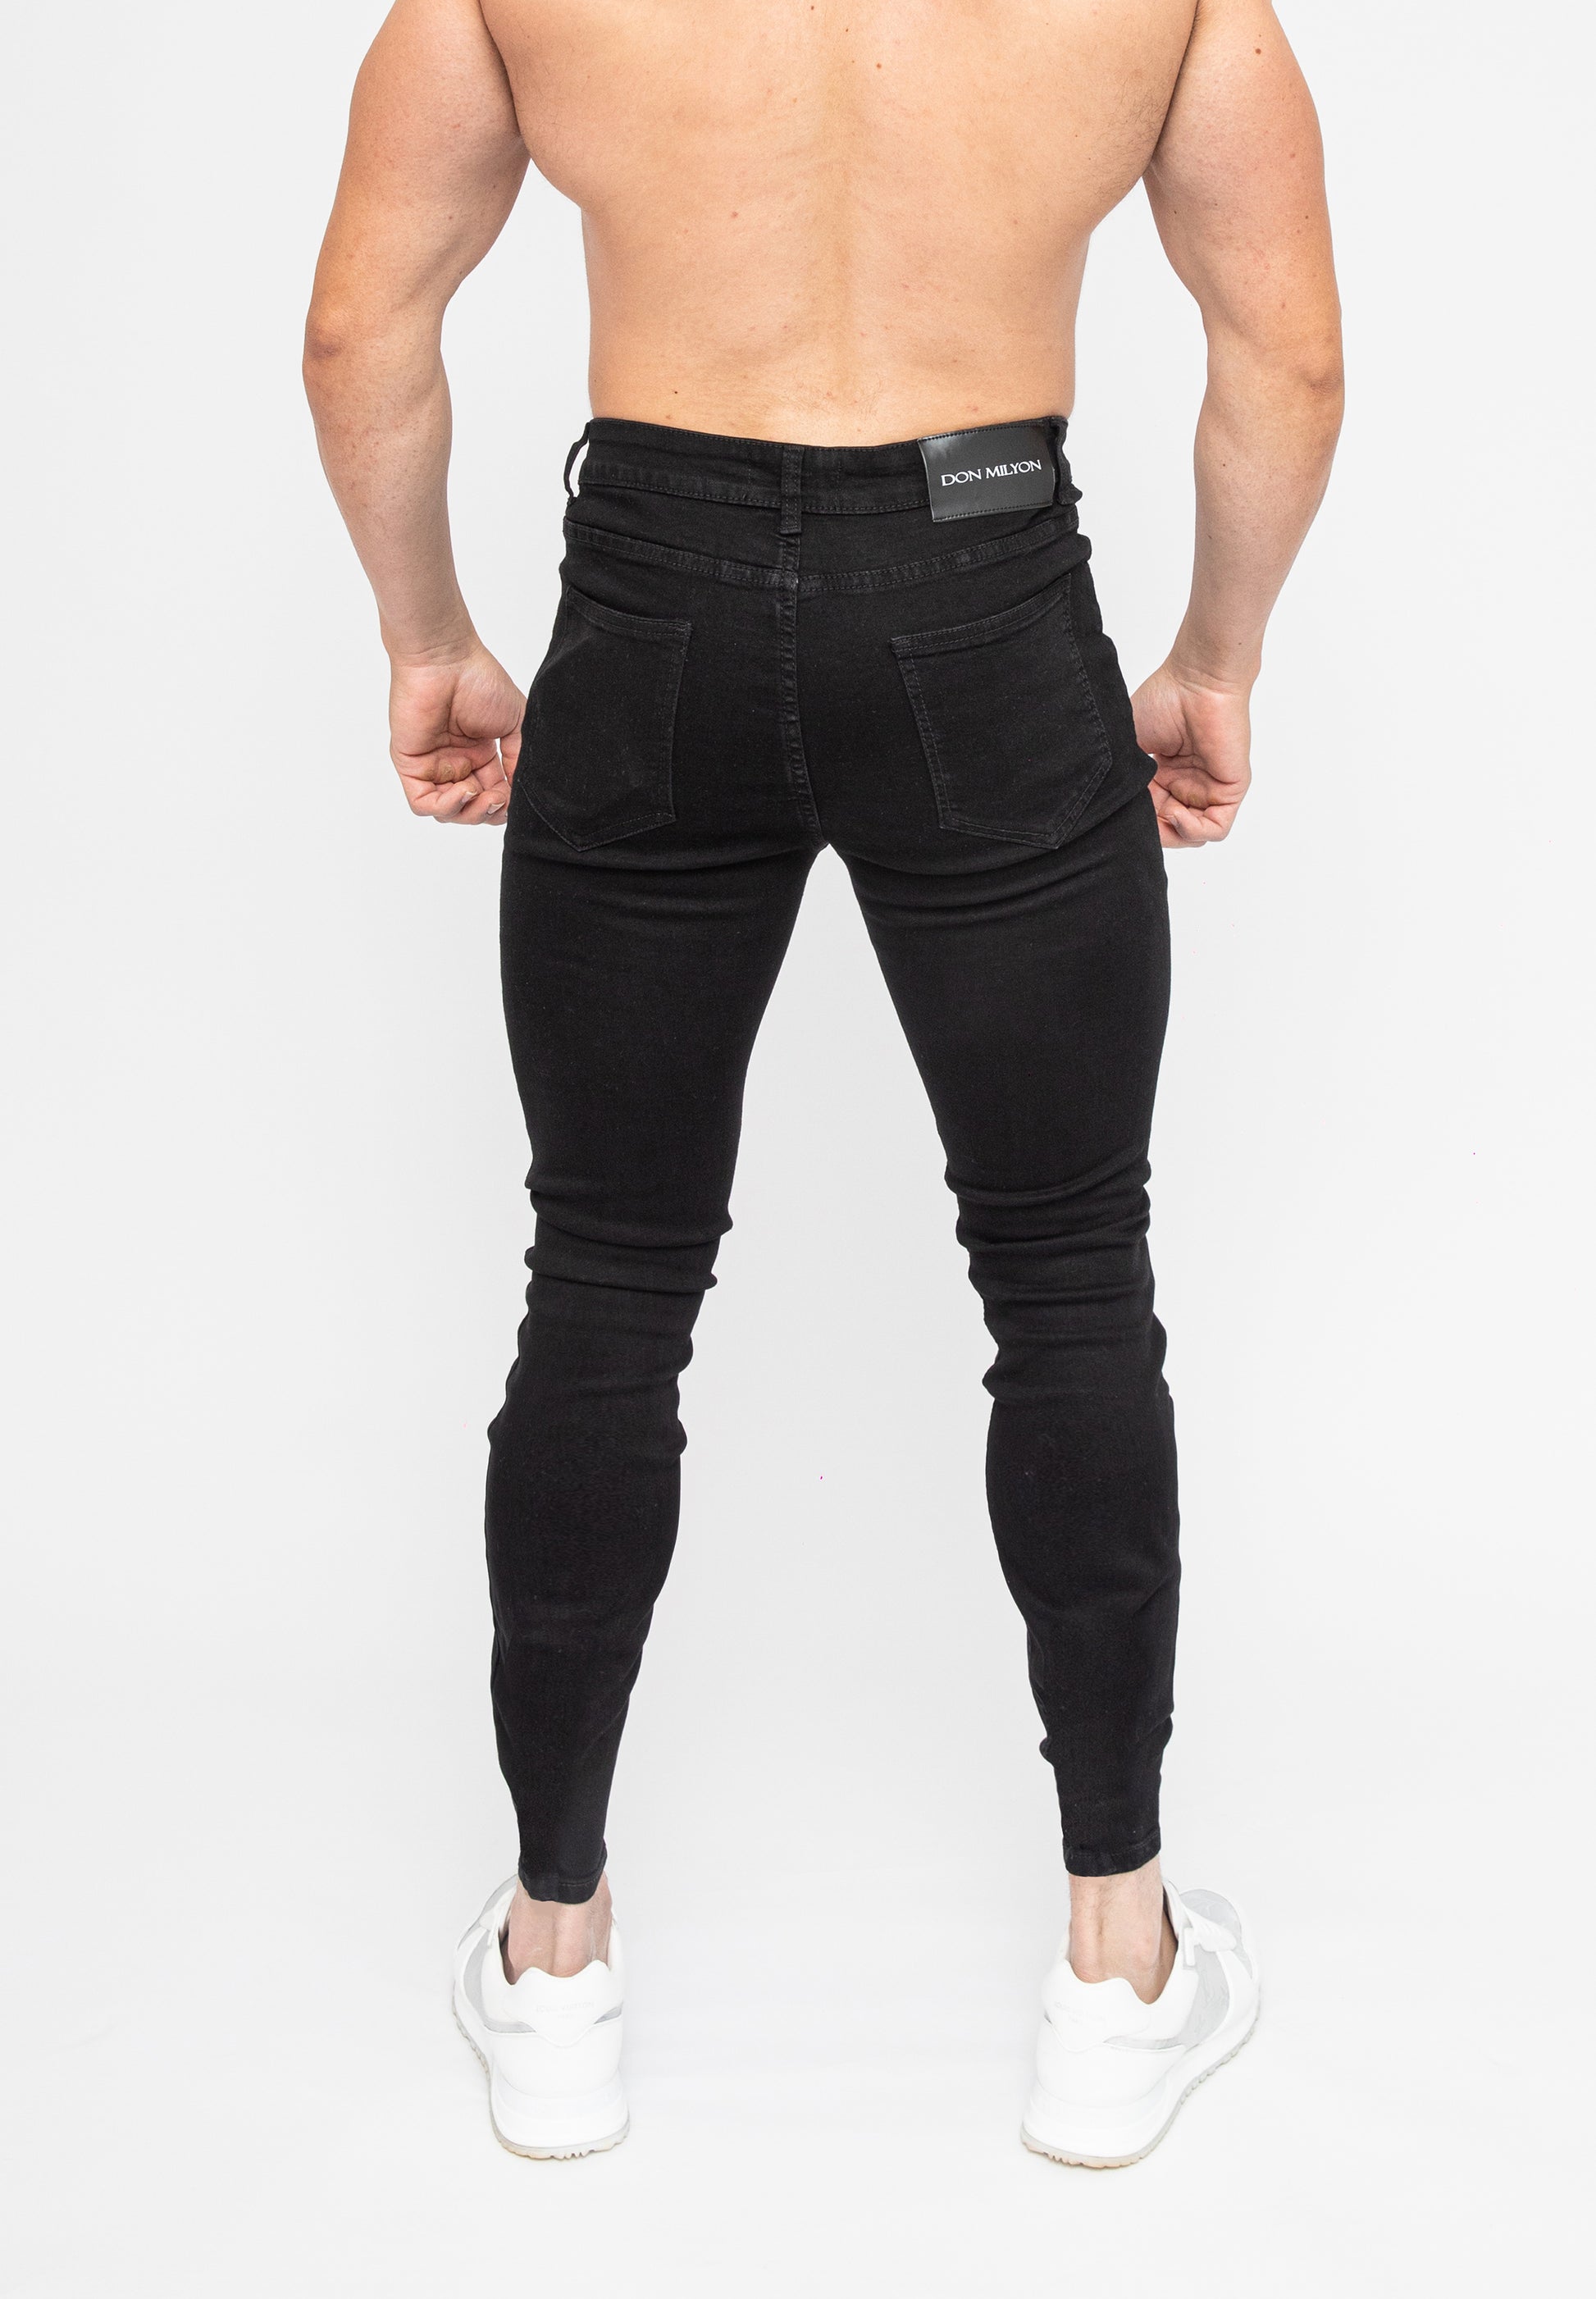 Men's Black Ripped Skinny Fit Stretch Jeans Denim Pants Rear